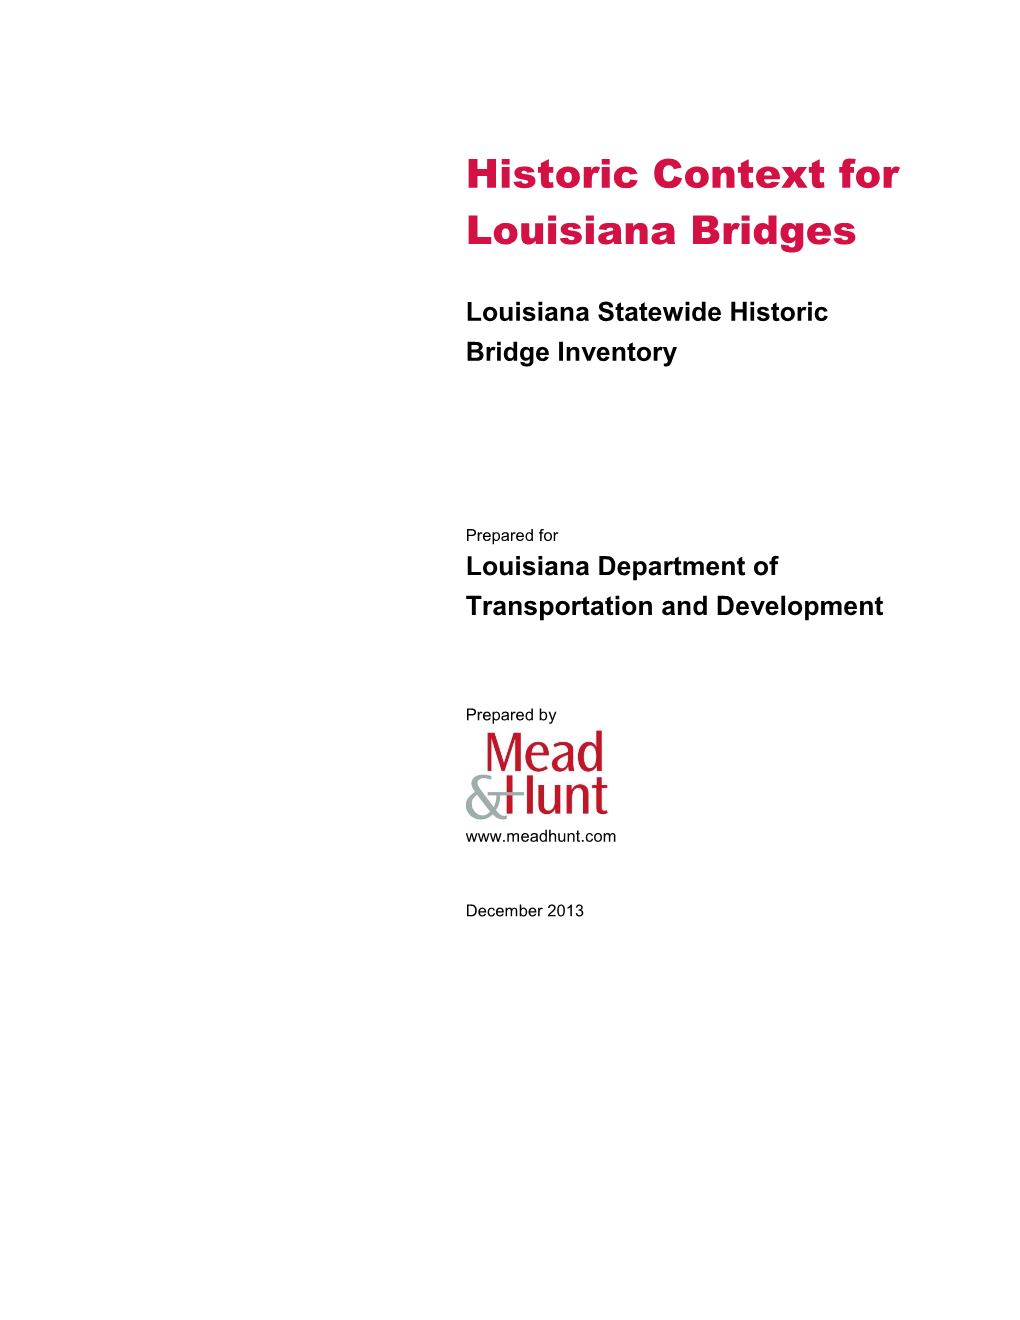 Historic Context for Louisiana Bridges